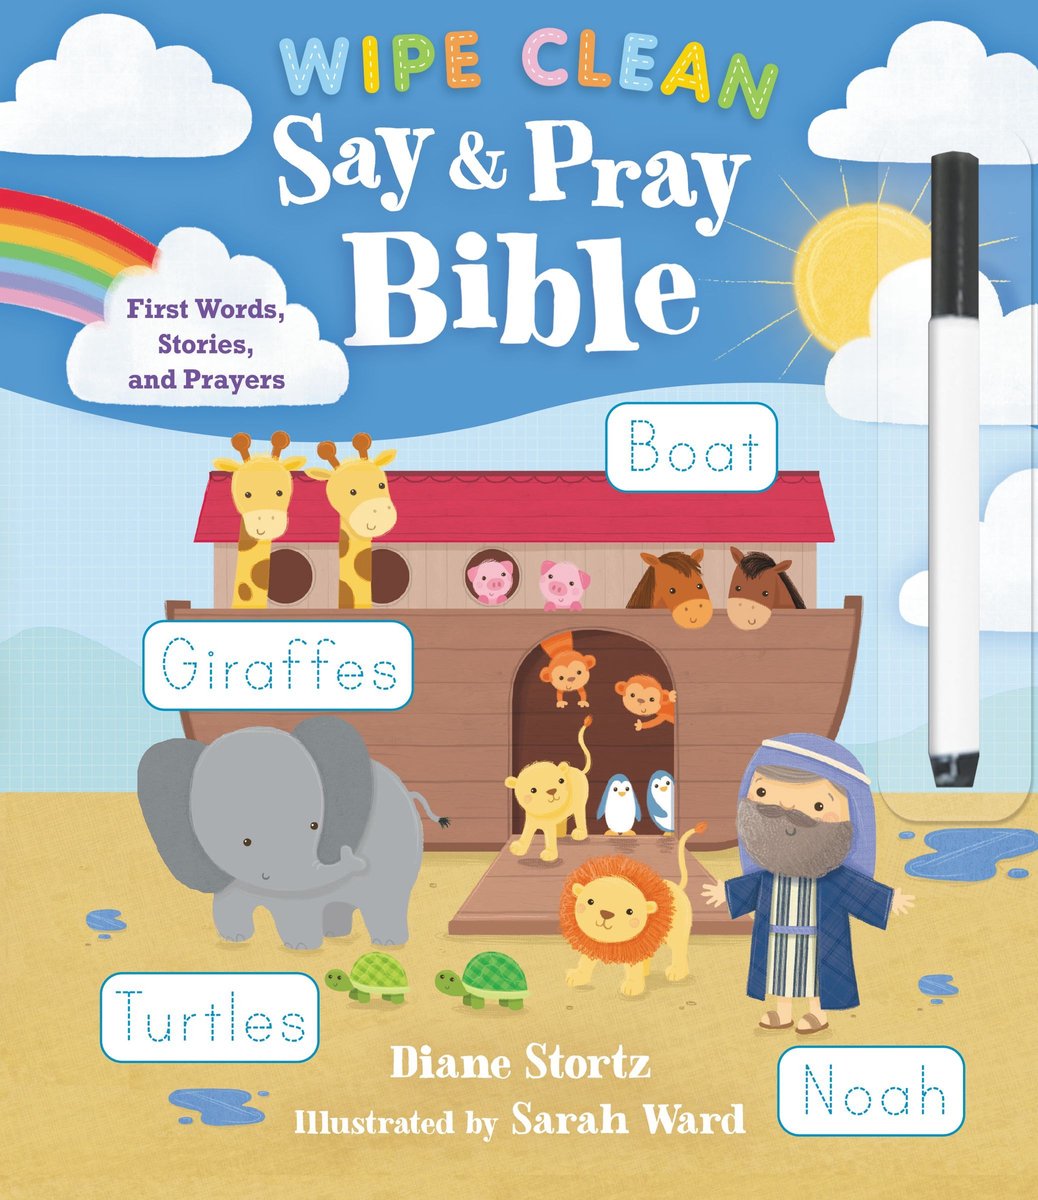 Say and Pray Bible Wipe Clean - Diane M. Stortz